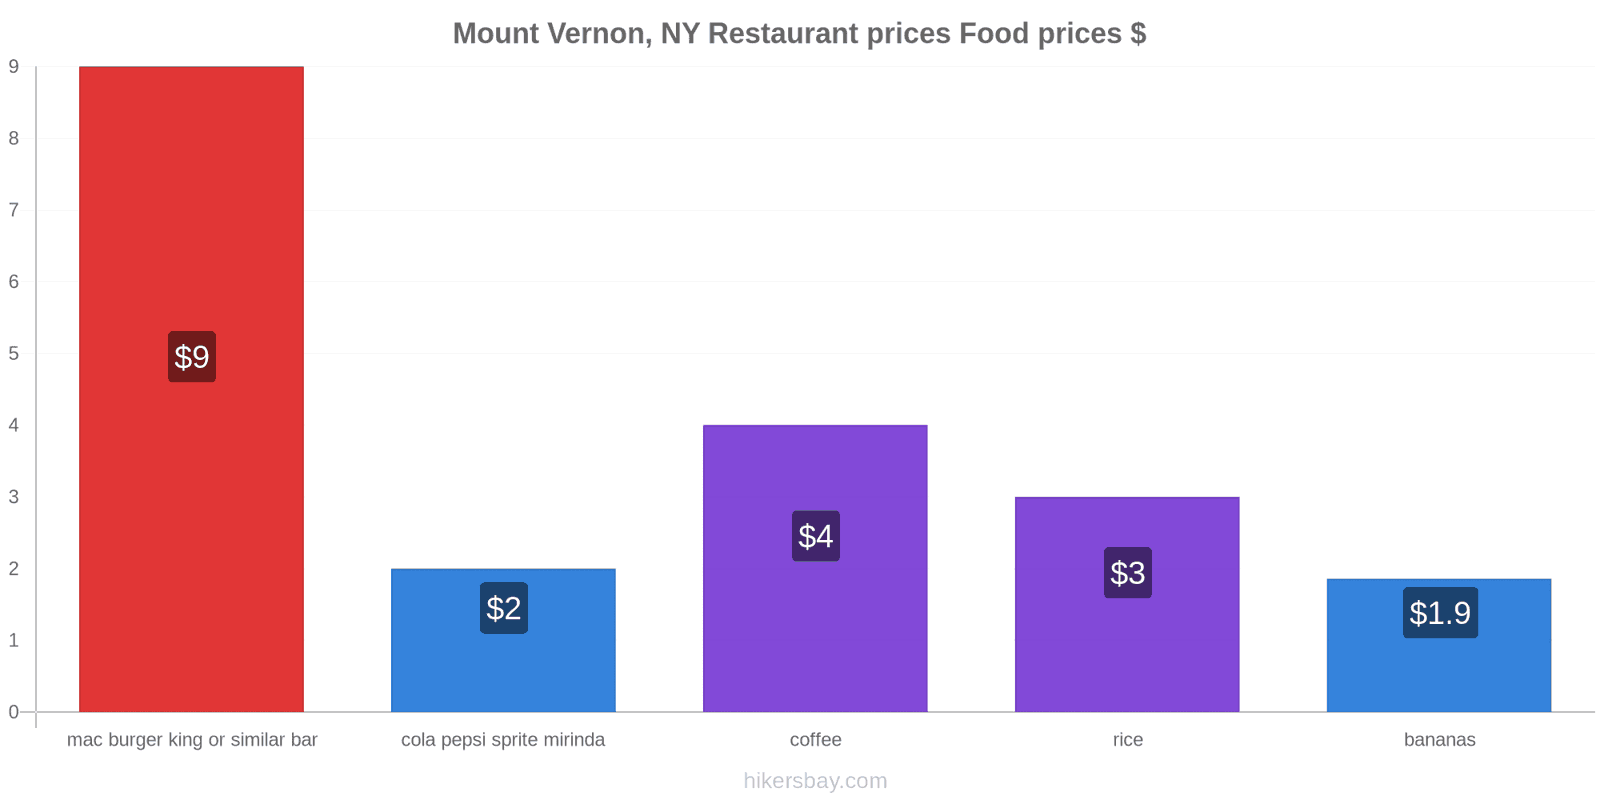 Mount Vernon, NY price changes hikersbay.com